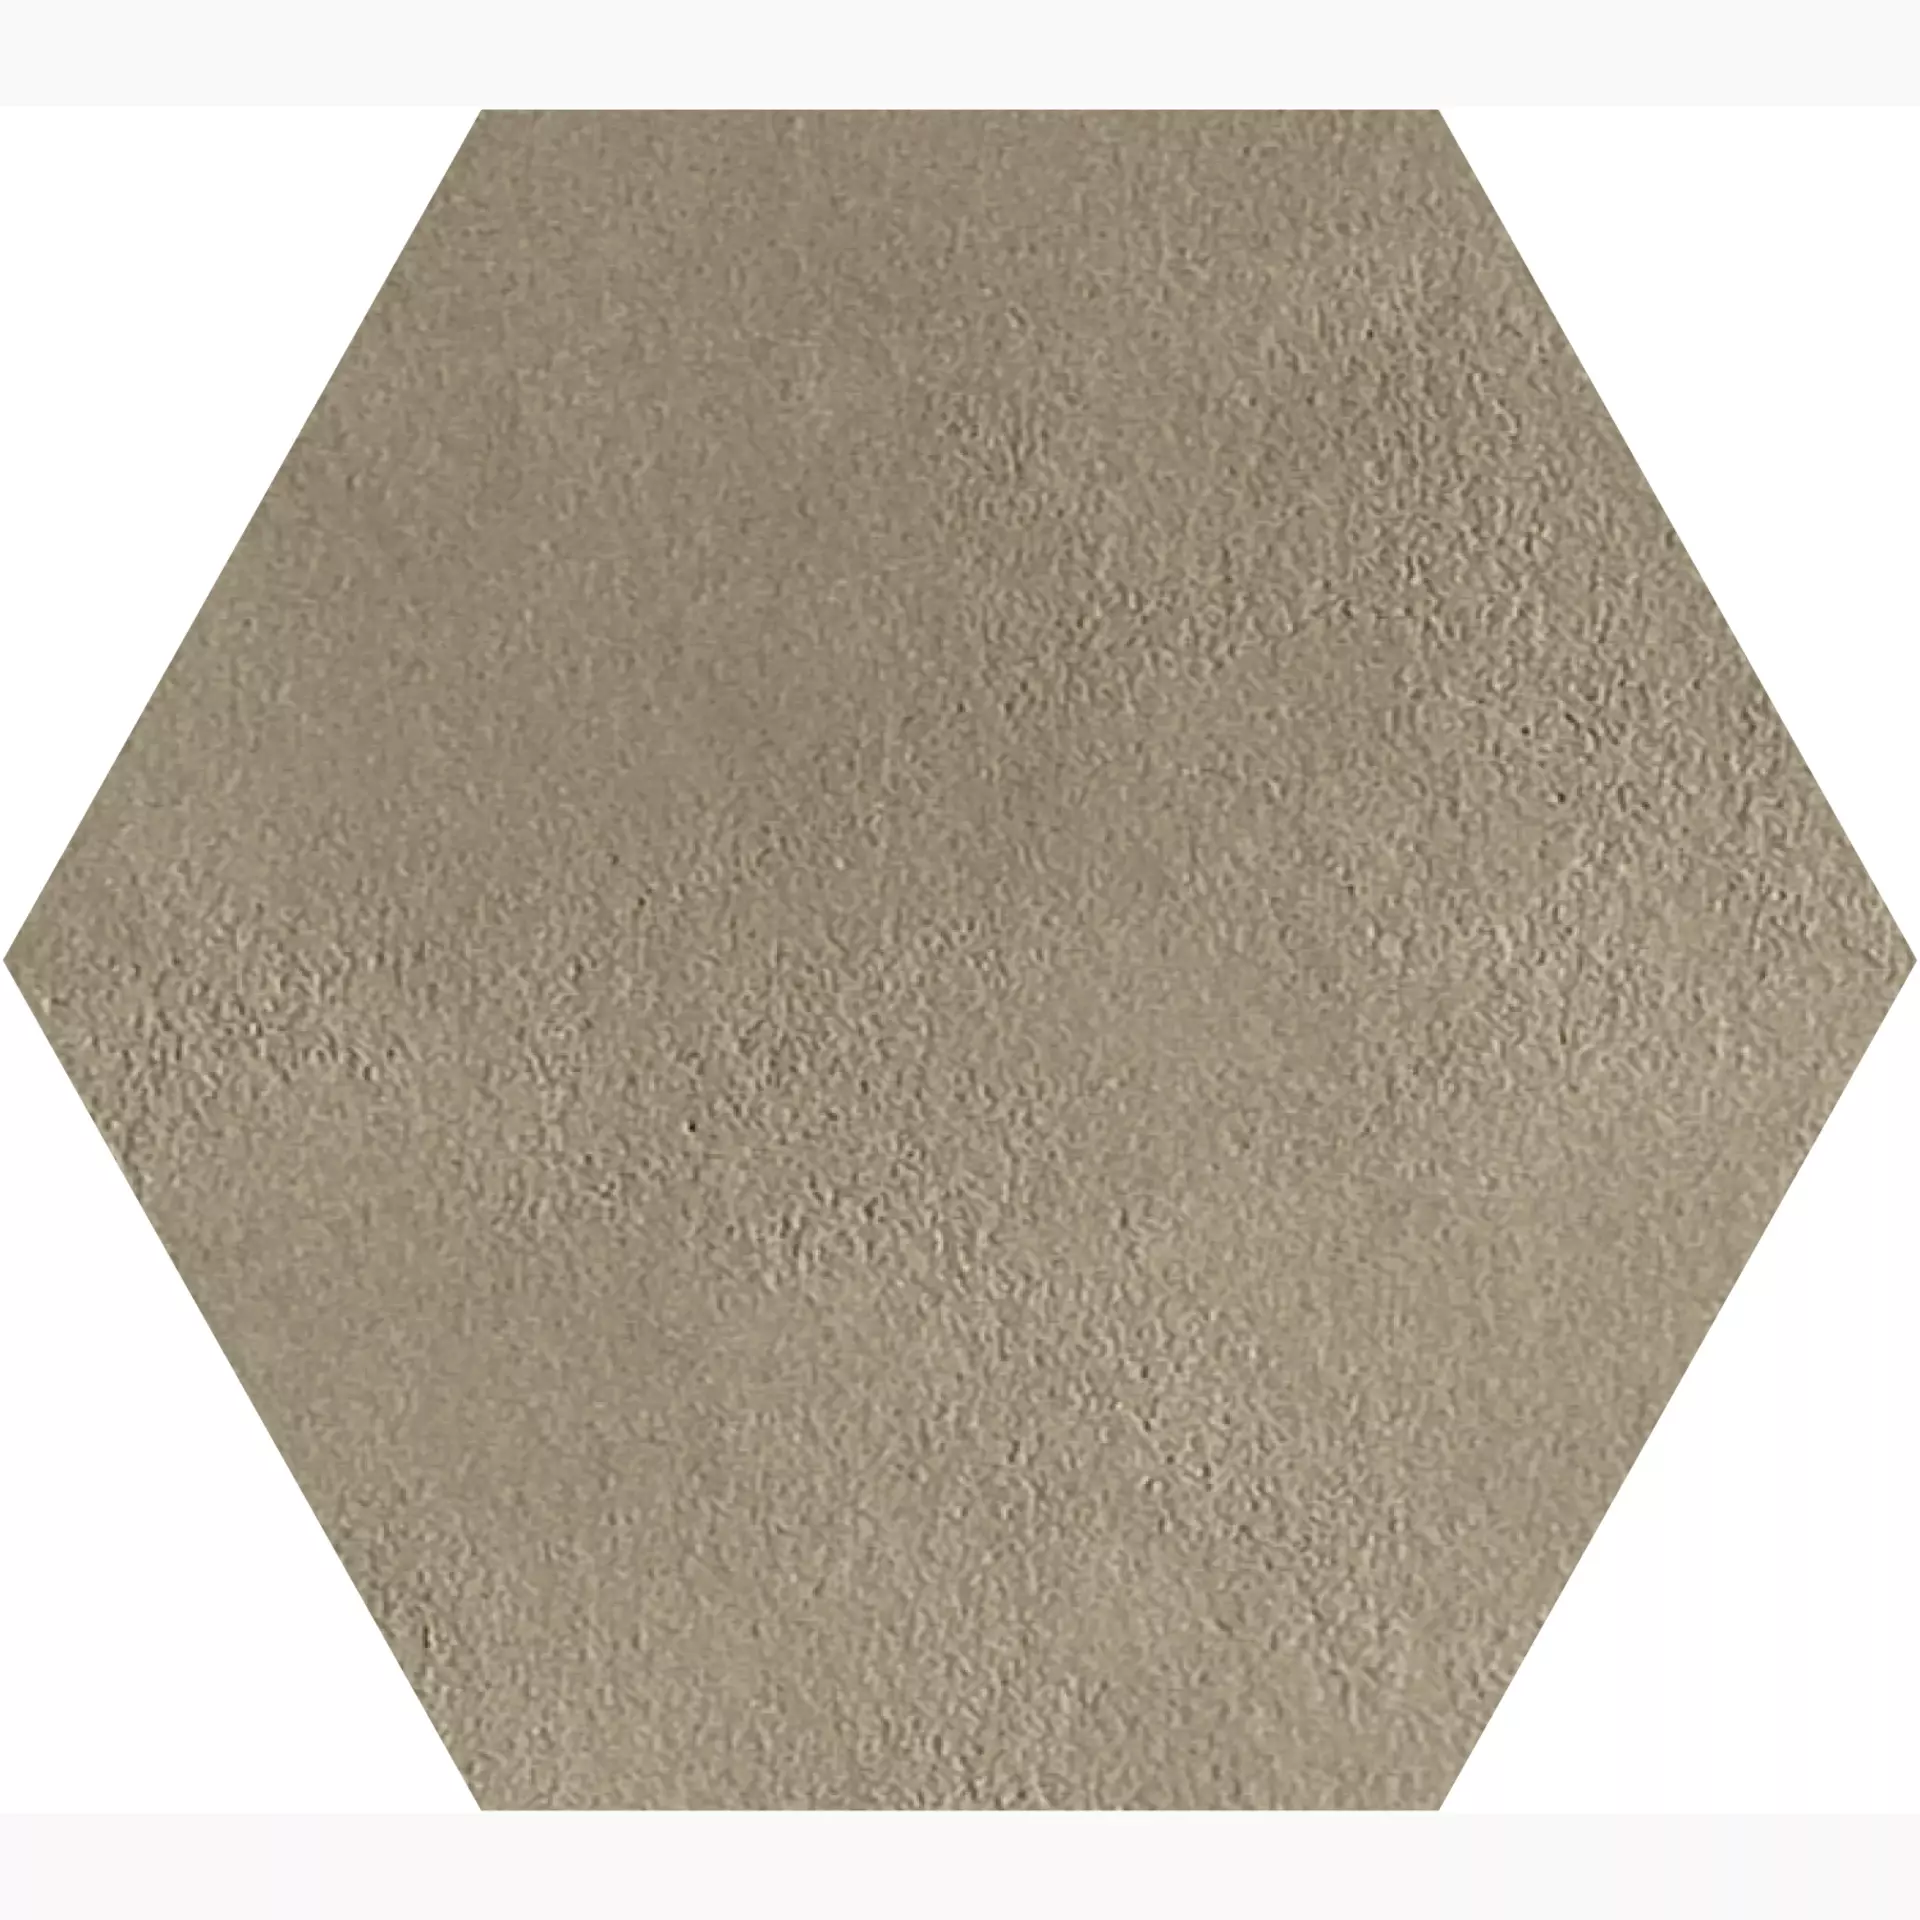 Gigacer Argilla Fog Material Decor Small Hexagon PO9ESAFOG 16x18cm 6mm